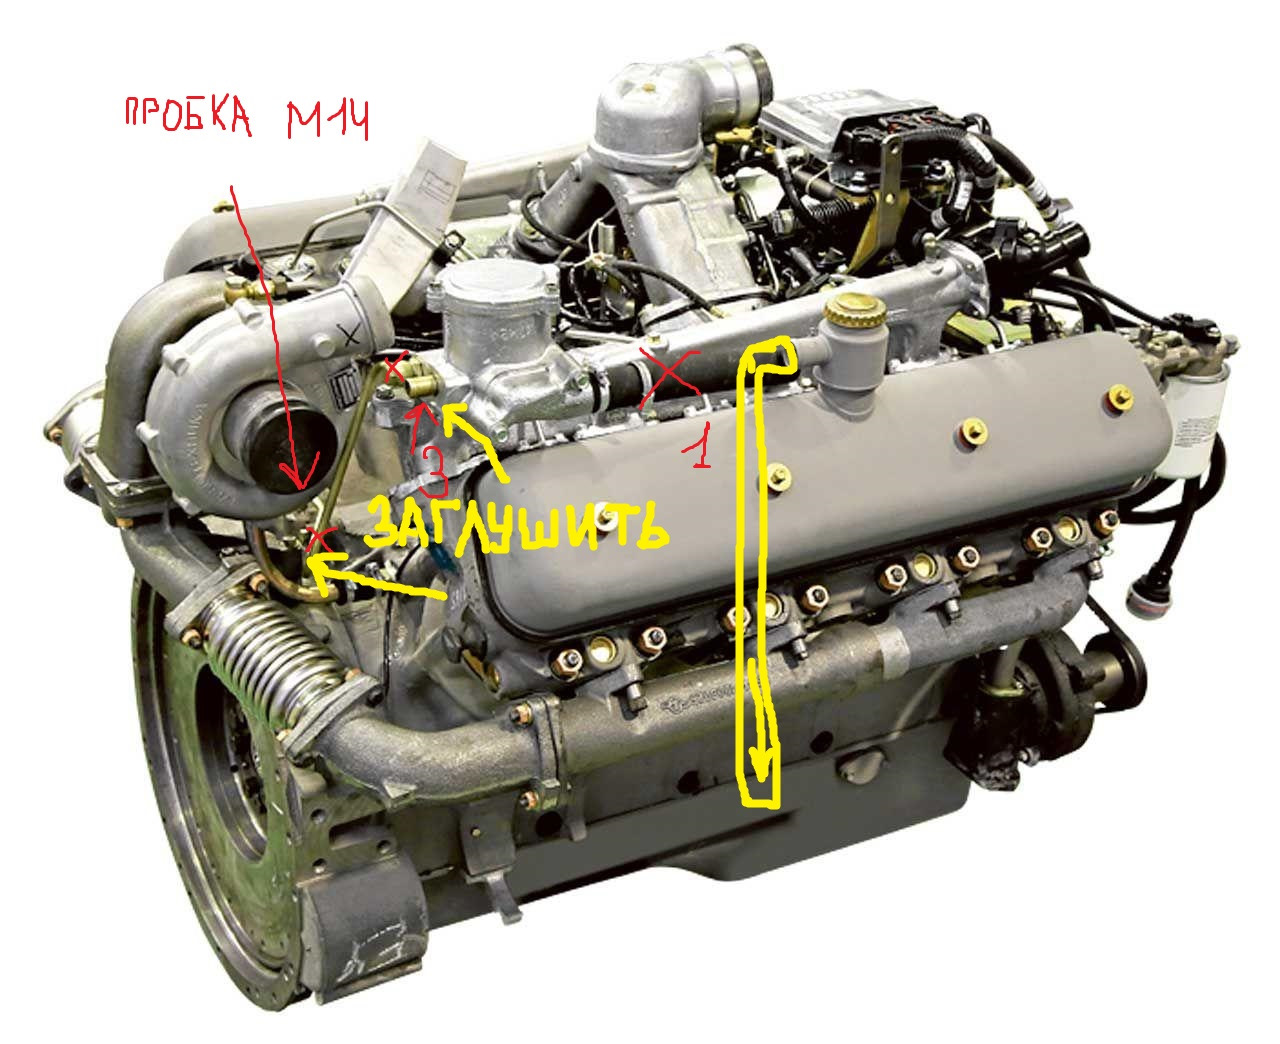 Ремонт двигателя ямз 236. Модель двигателя ЯМЗ 238. Мотор ЯМЗ 6582. Двигатель ЯМЗ 236 евро 4. Двигатель ЯМЗ 6582.10.